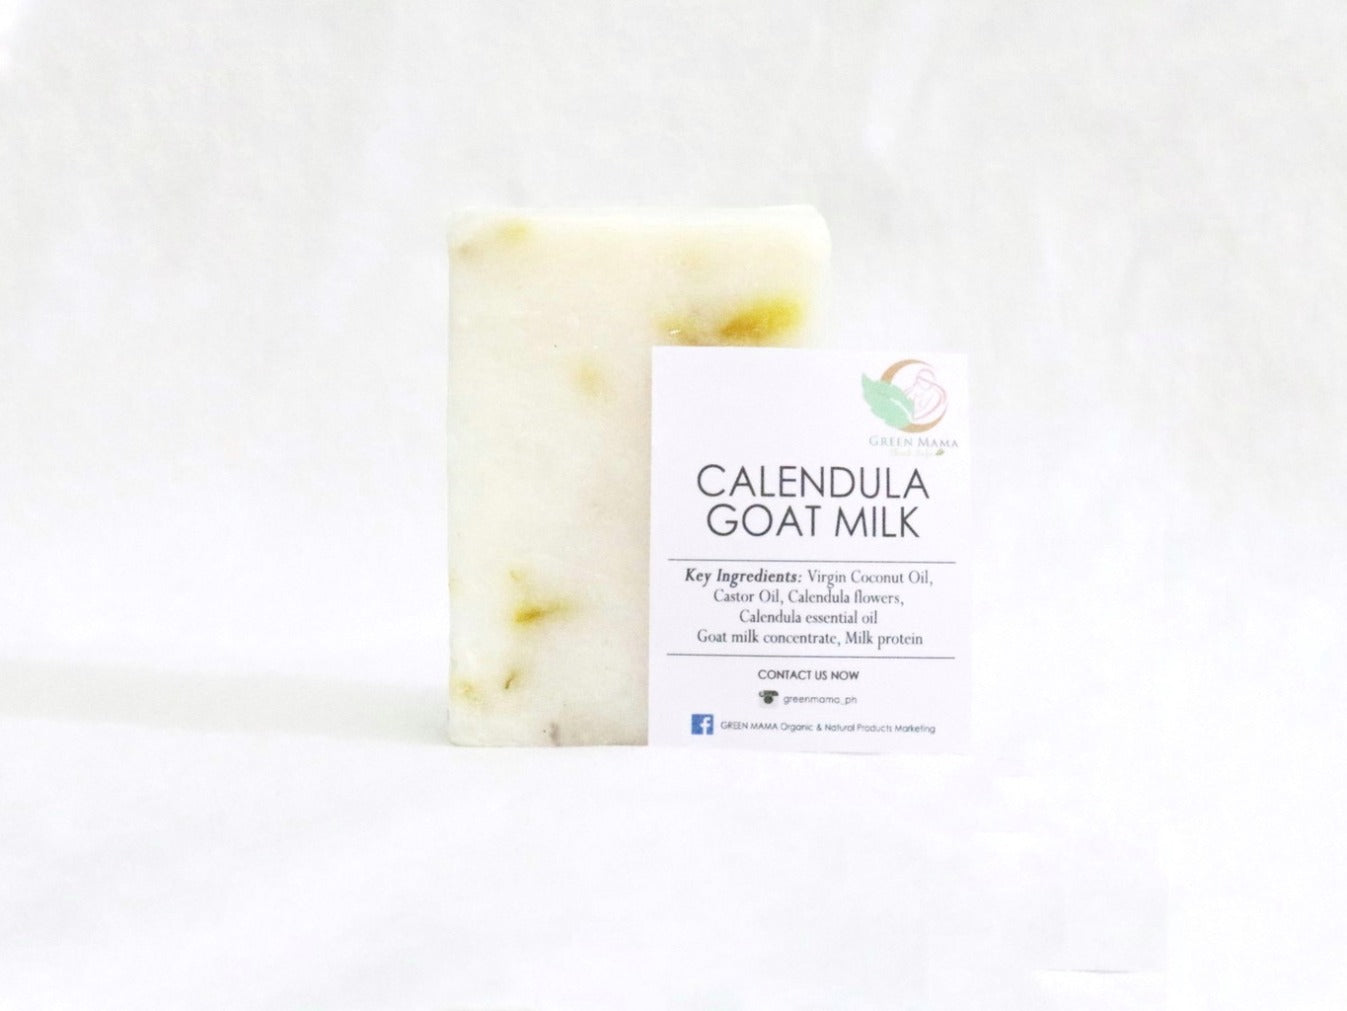 Calendula Goat Milk soap by Green Mama